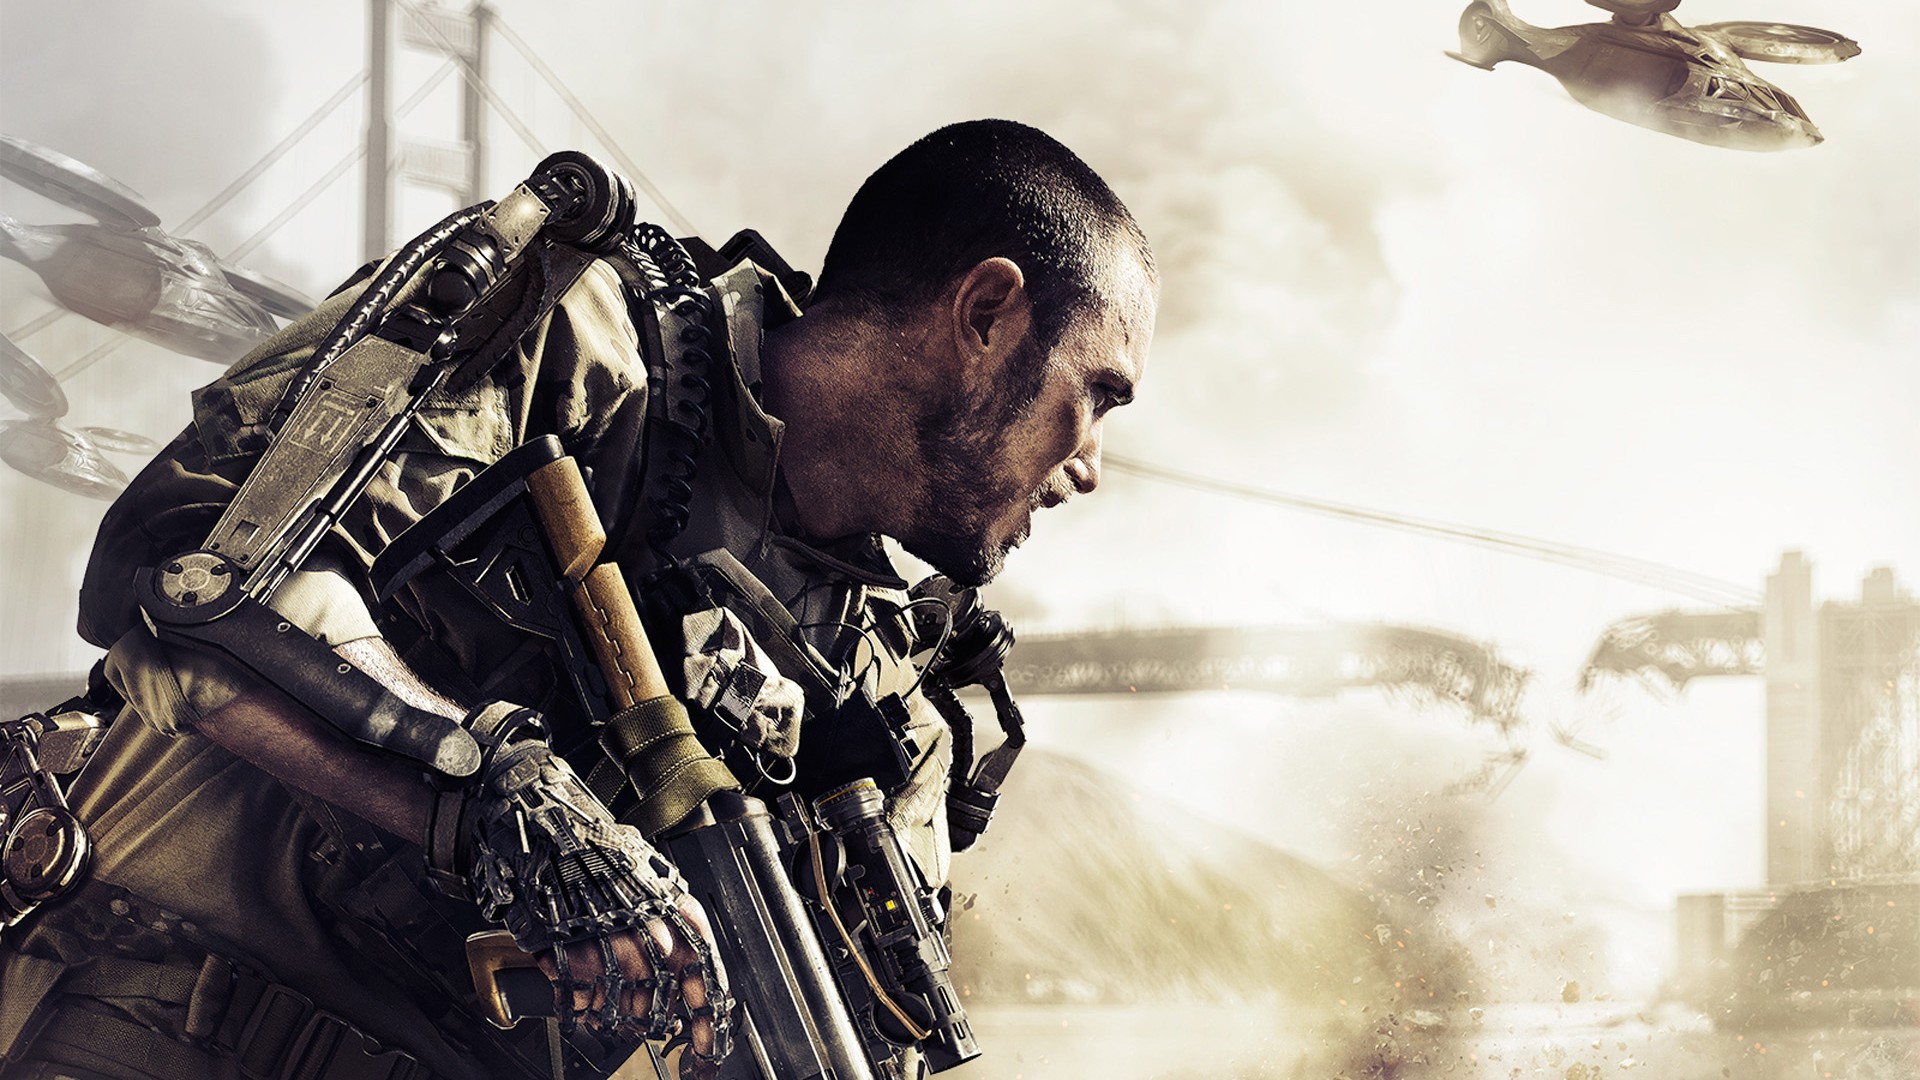 call of duty advanced warfare jeux video fond ecran wallpaper 